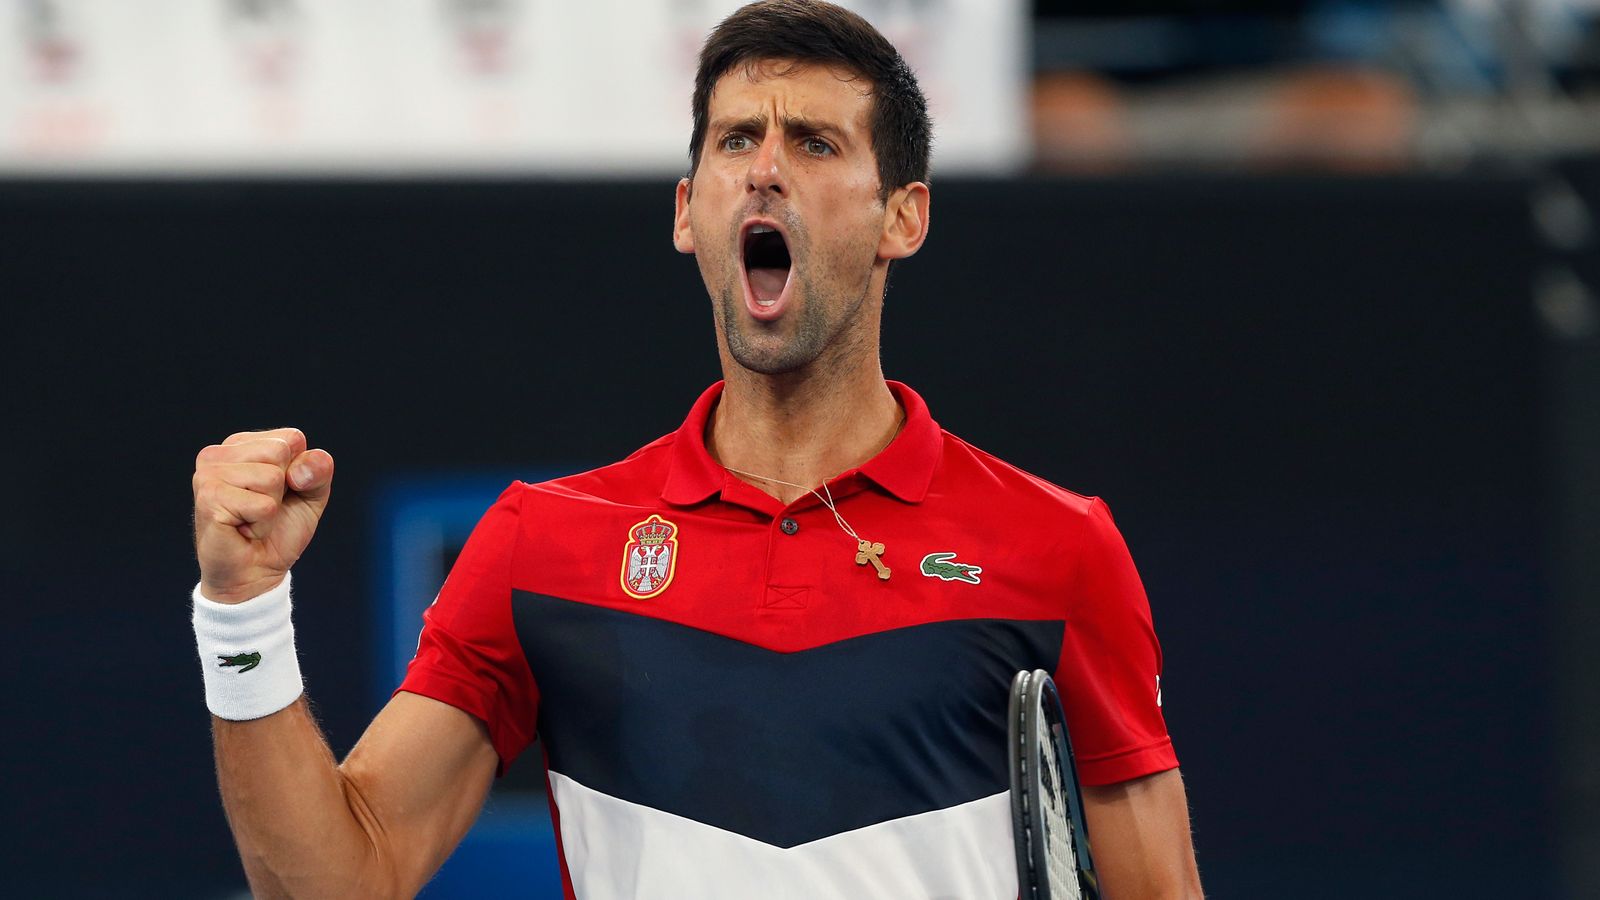 ATP Cup 2021: Novak Djokovic and Rafael Nadal are set to ...